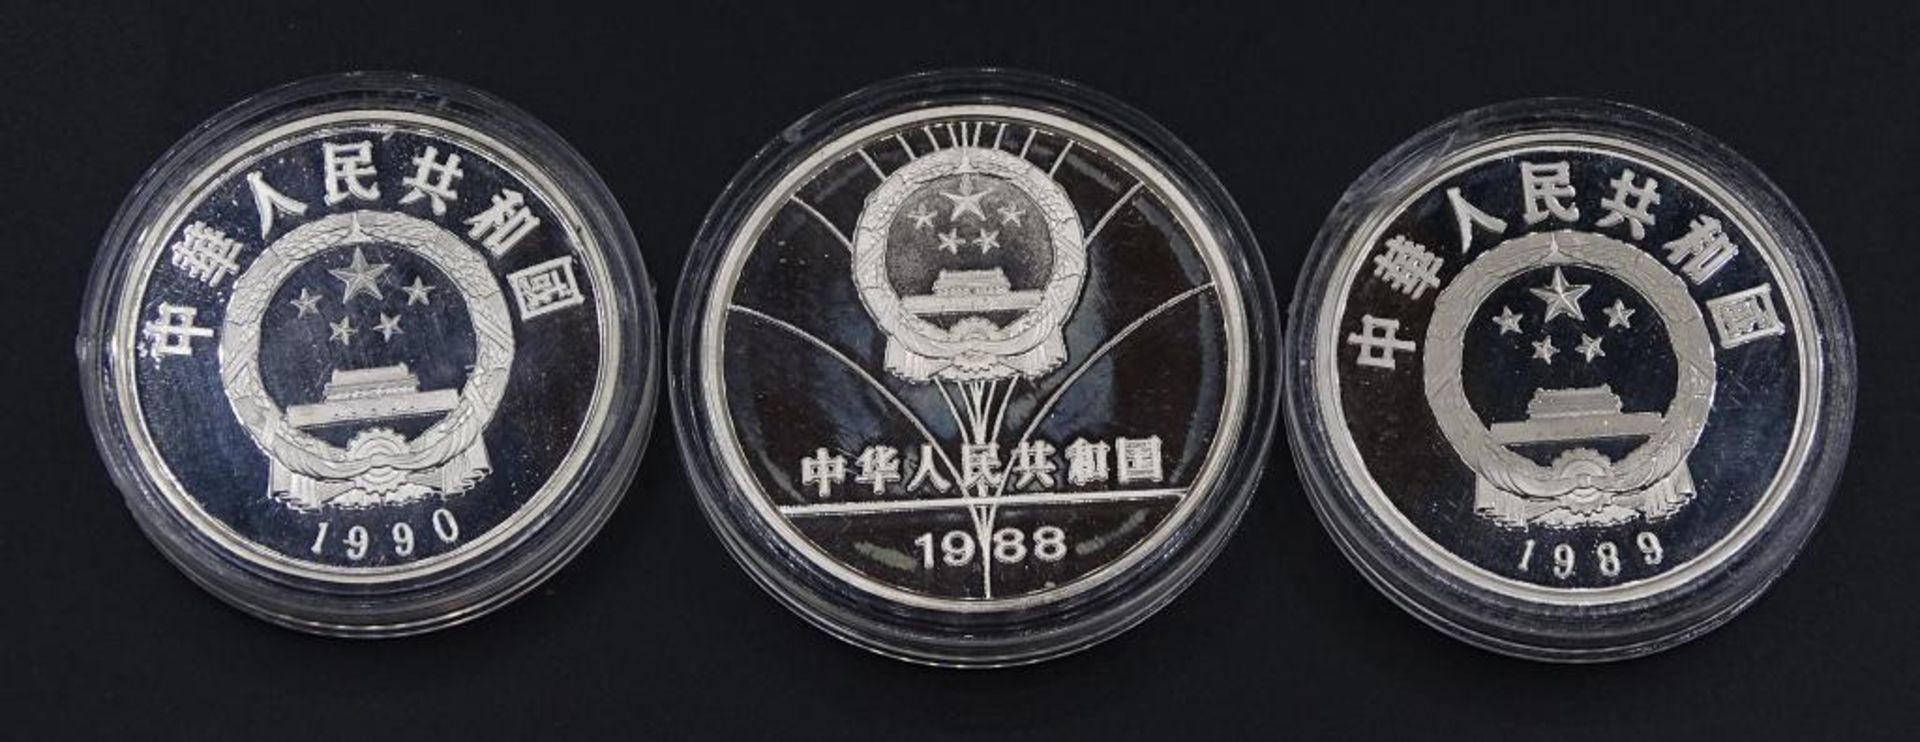 3x 5 Yuan, China,1988/89/90, in Kapseln - Bild 2 aus 2